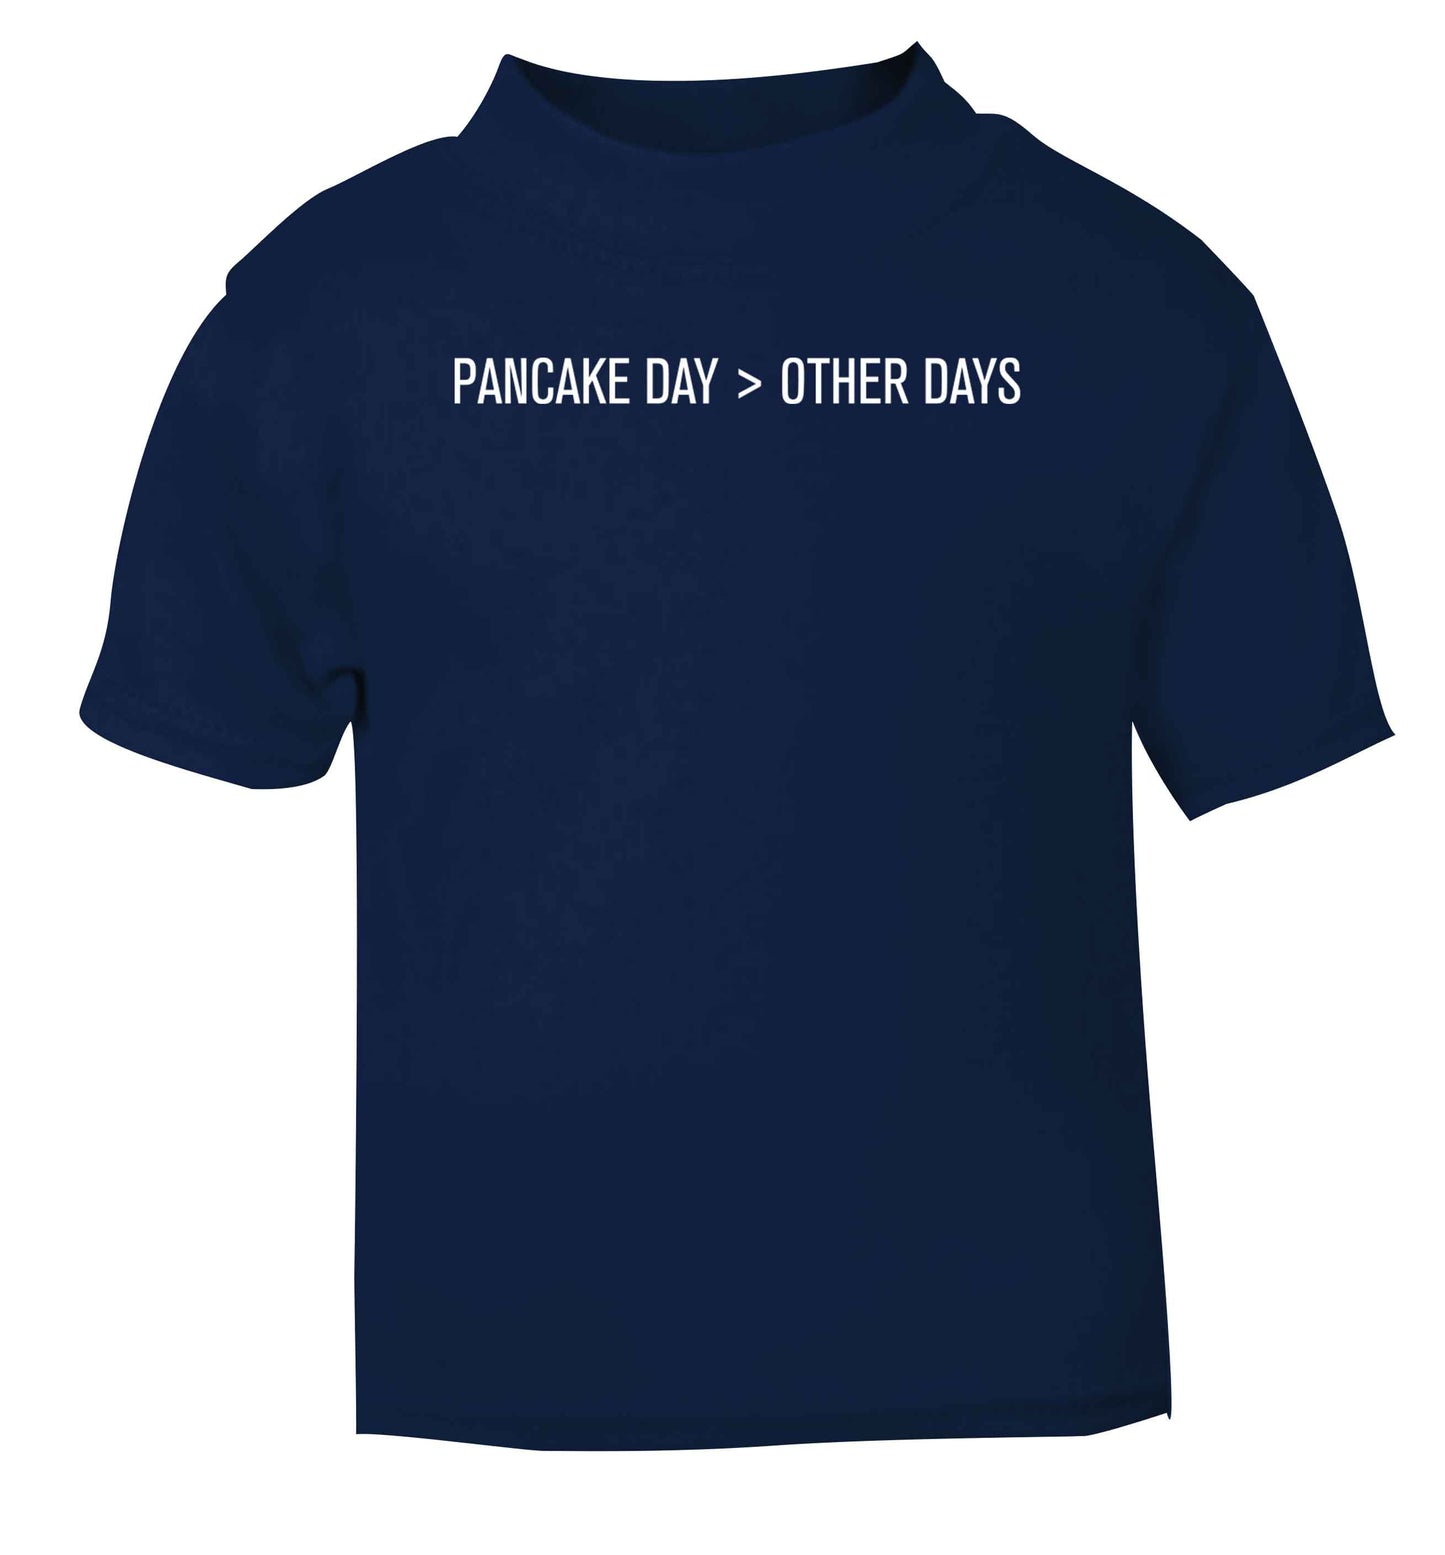 Pancake day > other days navy baby toddler Tshirt 2 Years